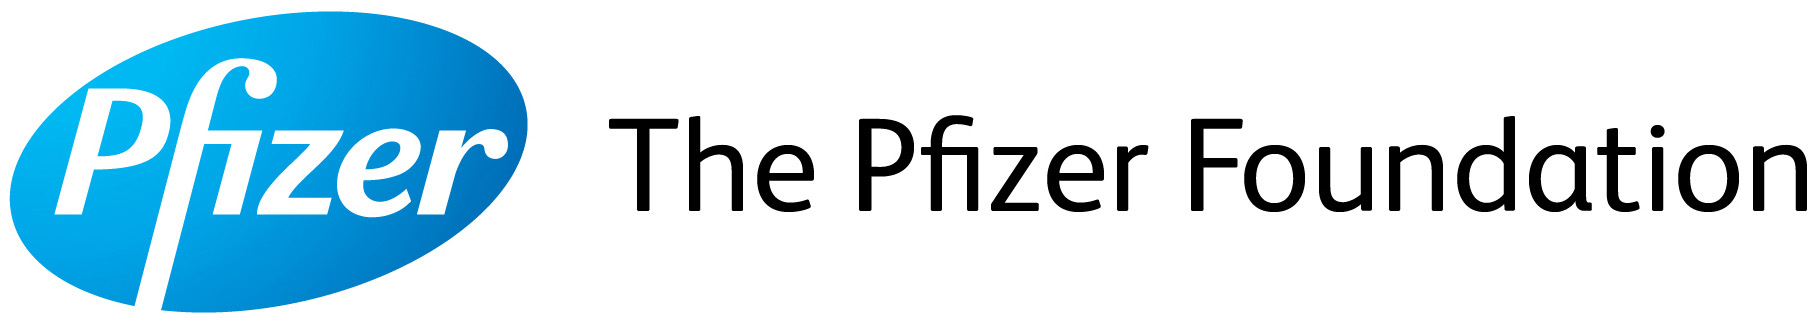 The Pfizer Foundation"